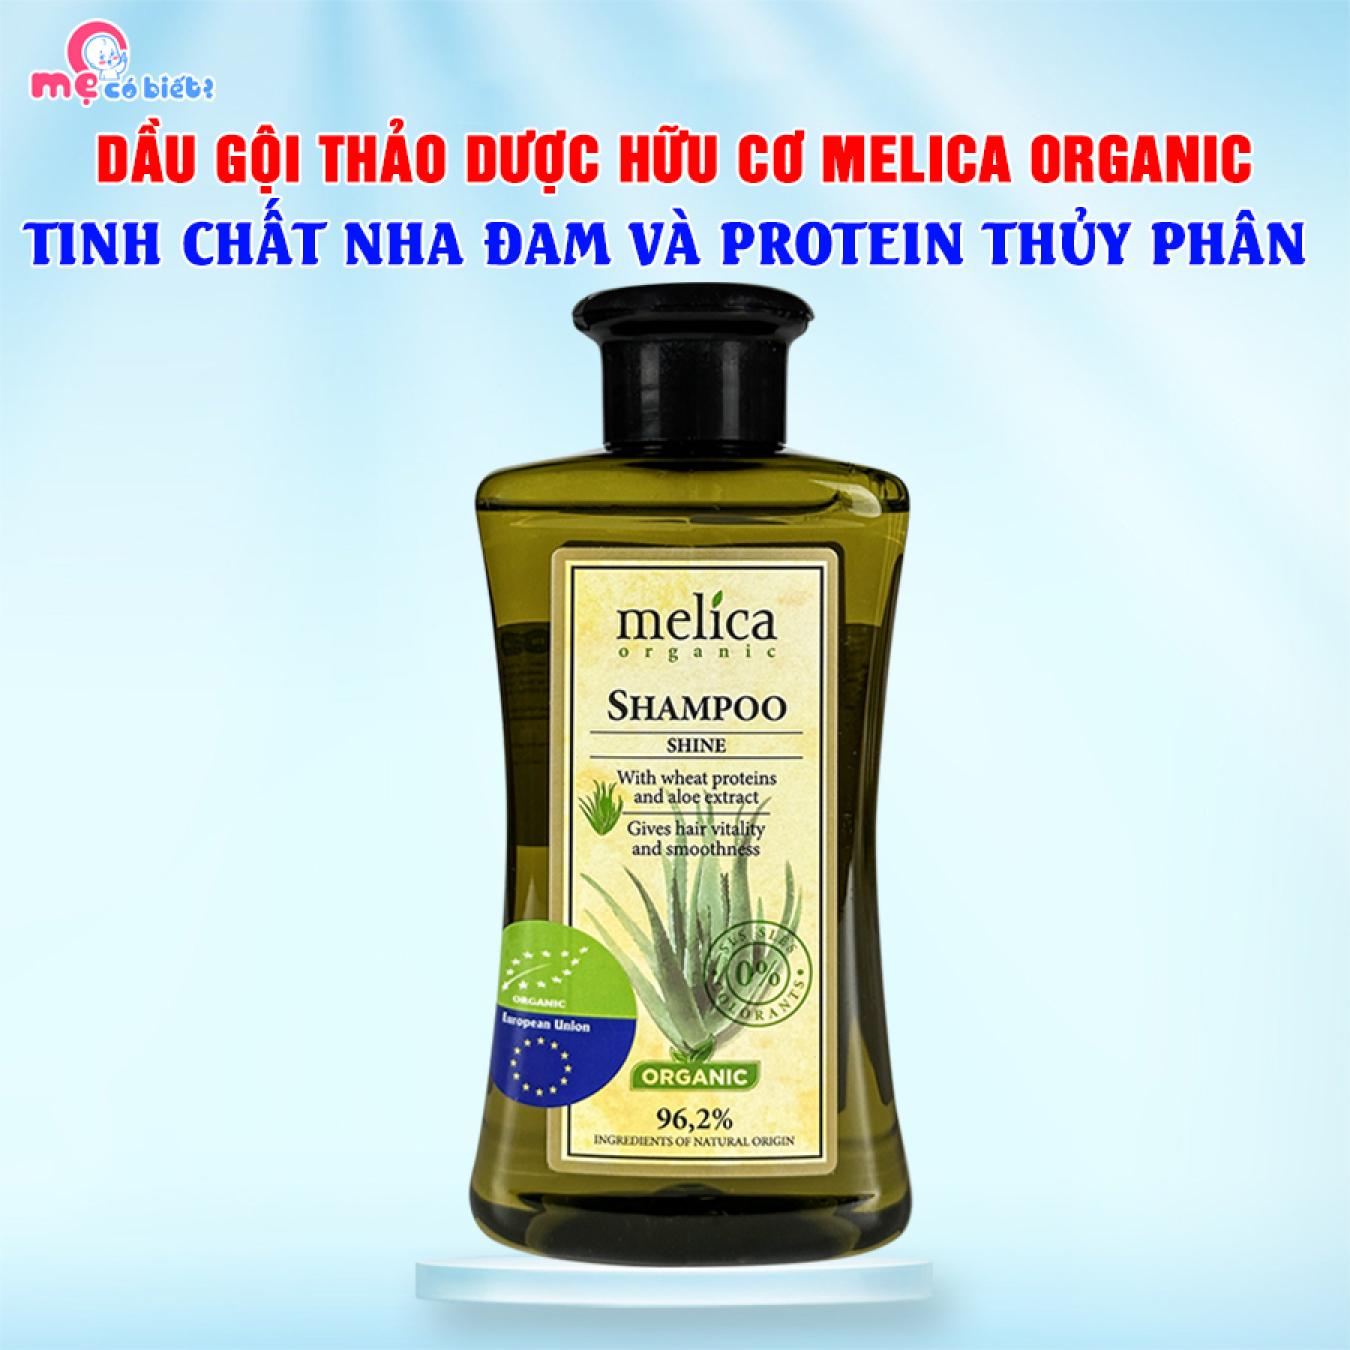 Dầu gội hữu cơ Melica Organic - tinh chất Nha đam hữu cơ